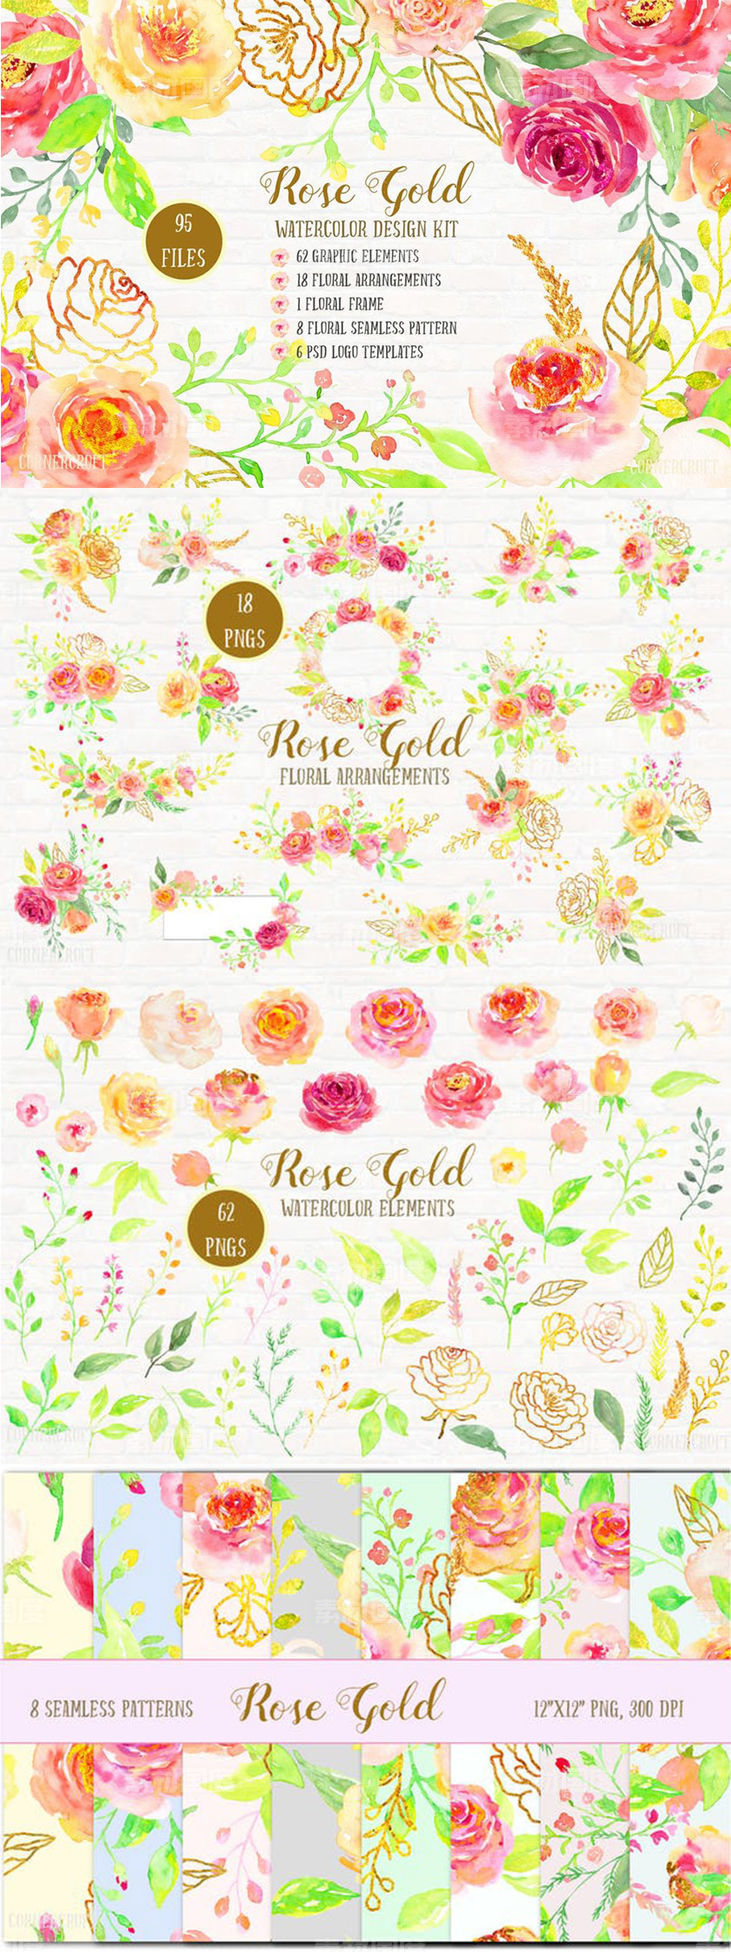 玫瑰金水彩花卉设计素材套装 Watercolor Design Kit Rose Gold